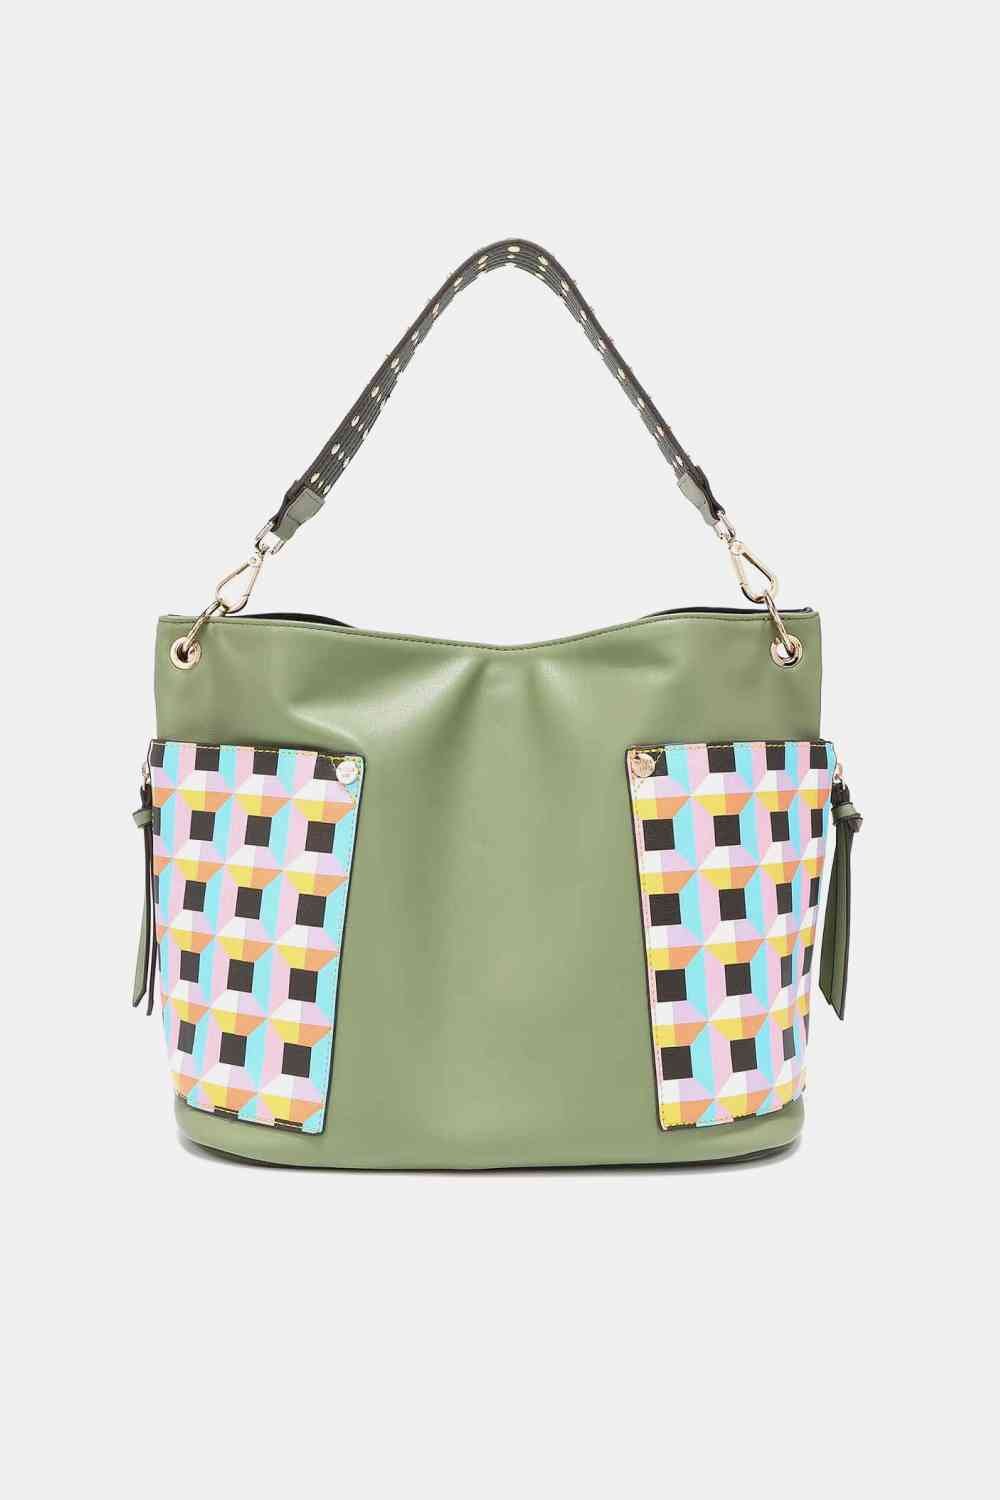 Nicole Lee USA Quihn 3-Piece Handbag Set - BloomBliss.com